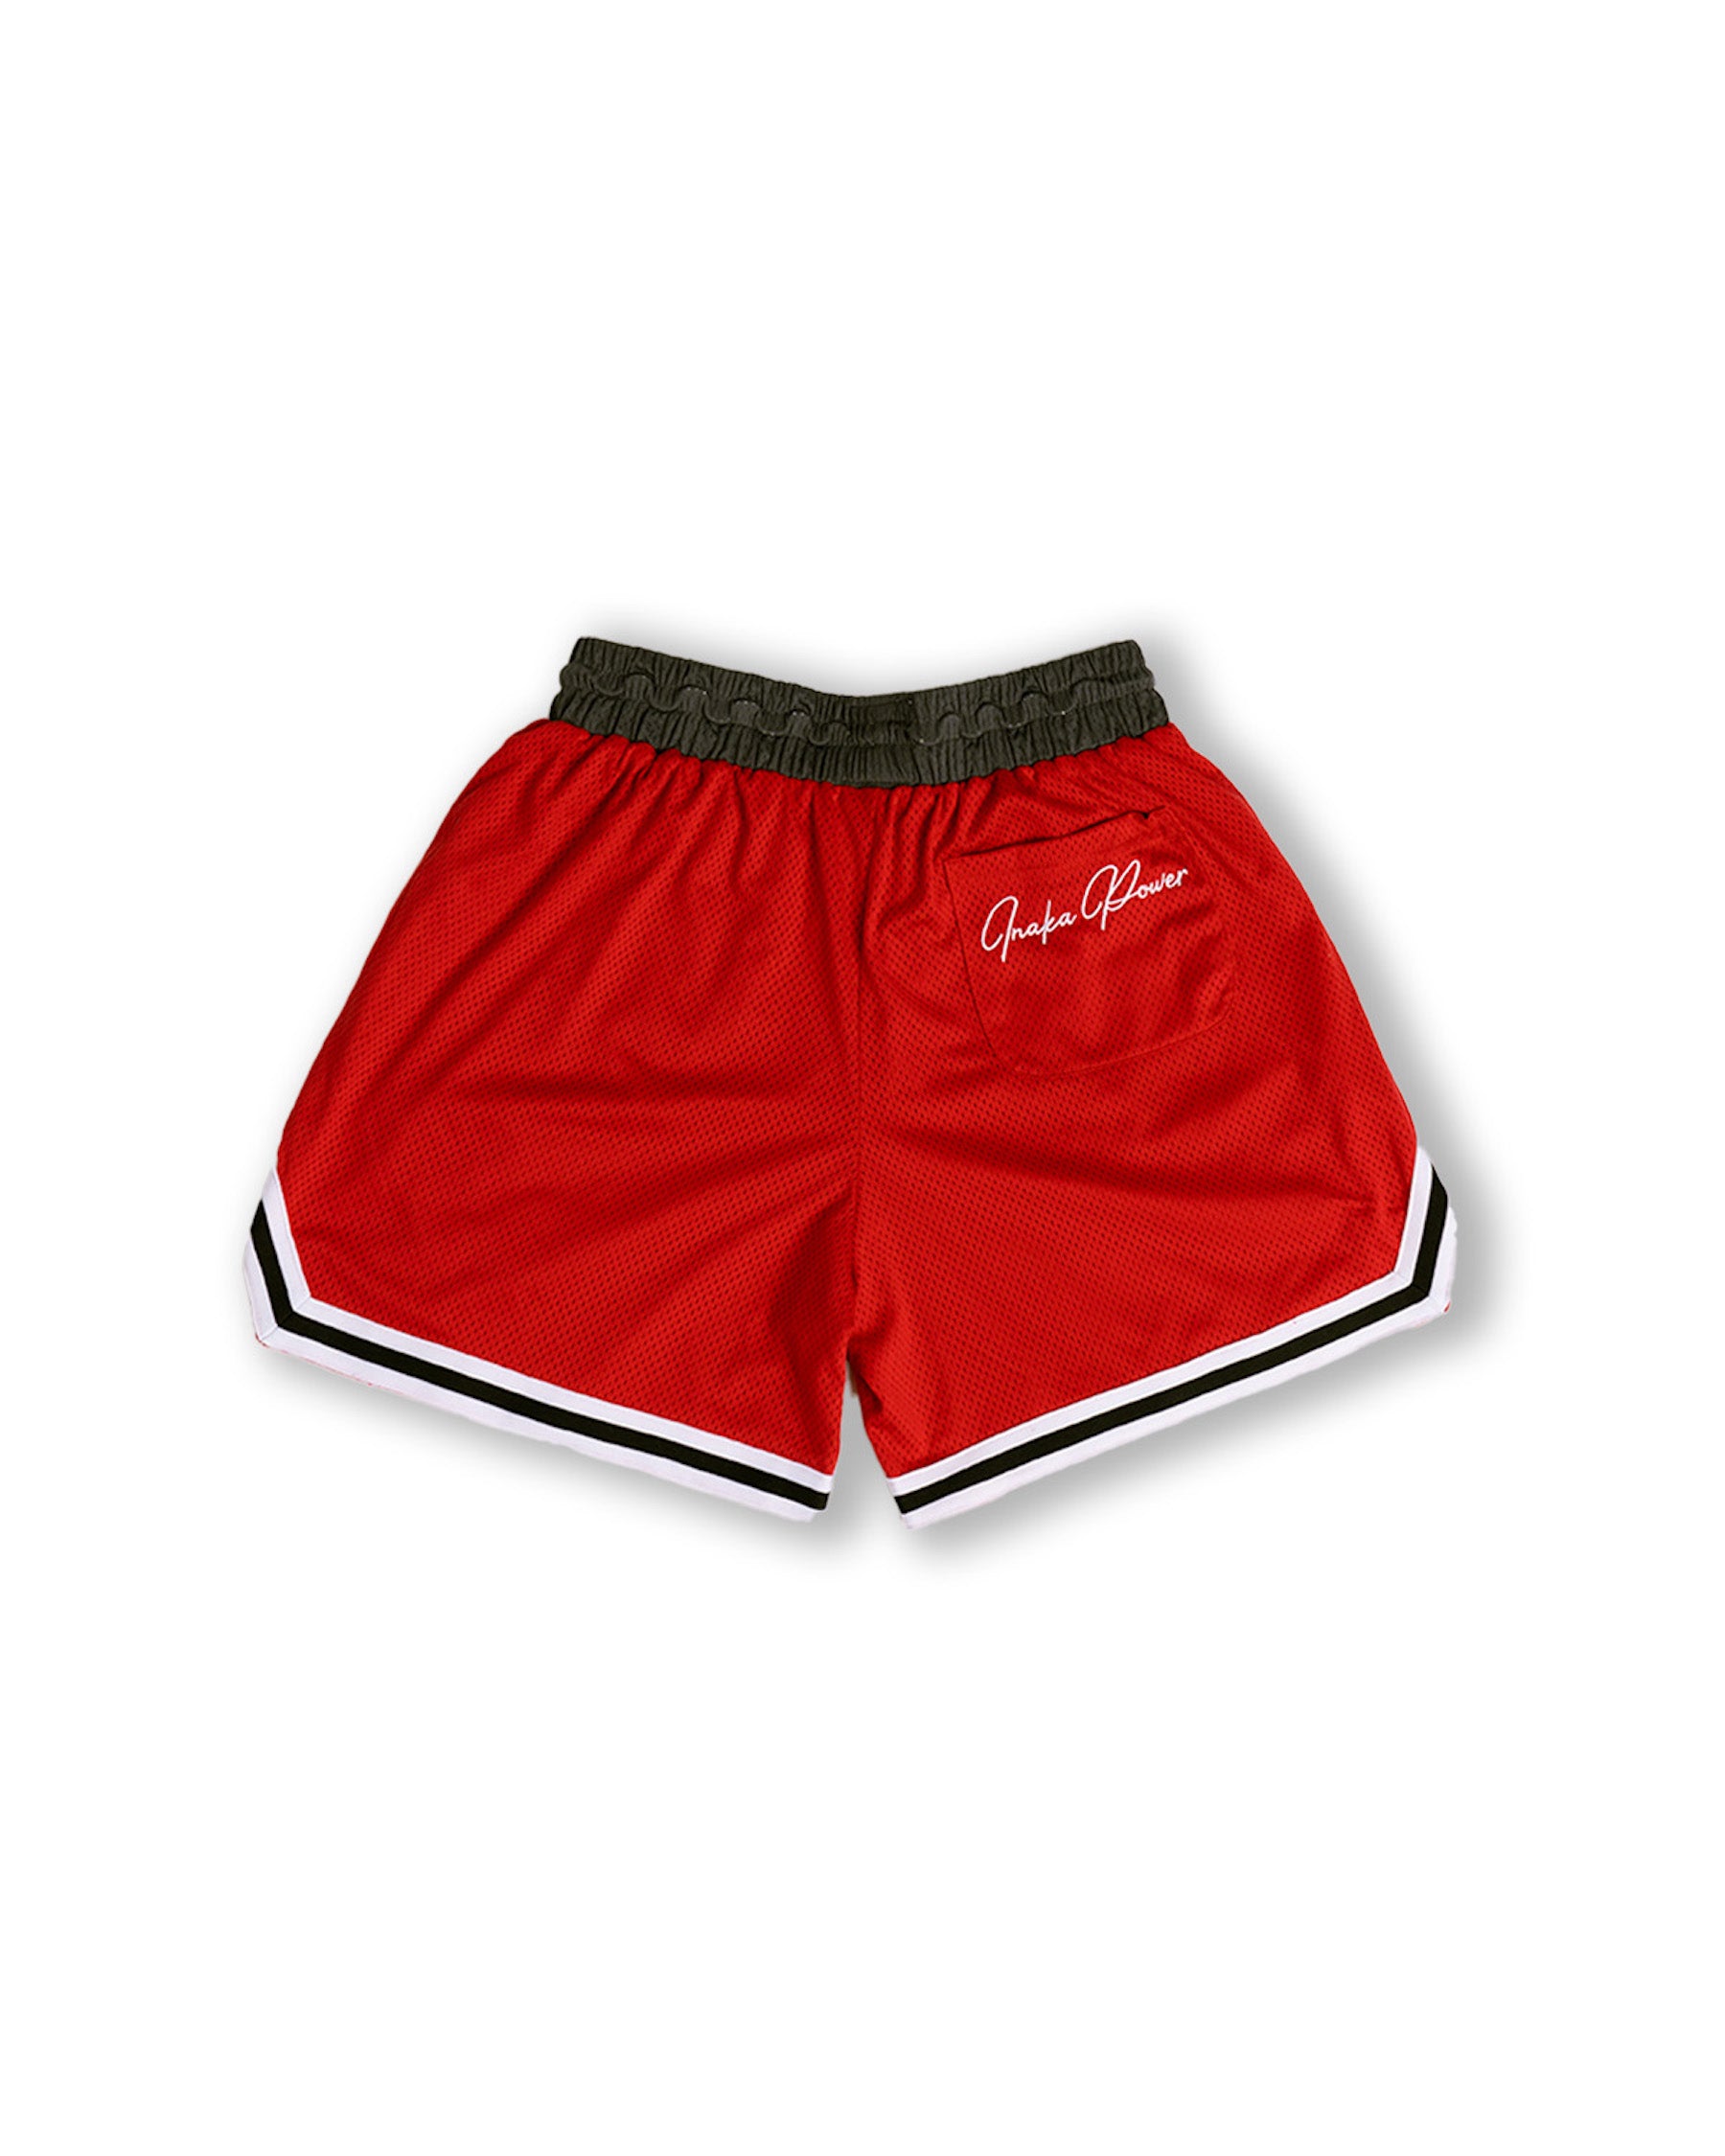 Men's League Mesh Shorts - Brick Red